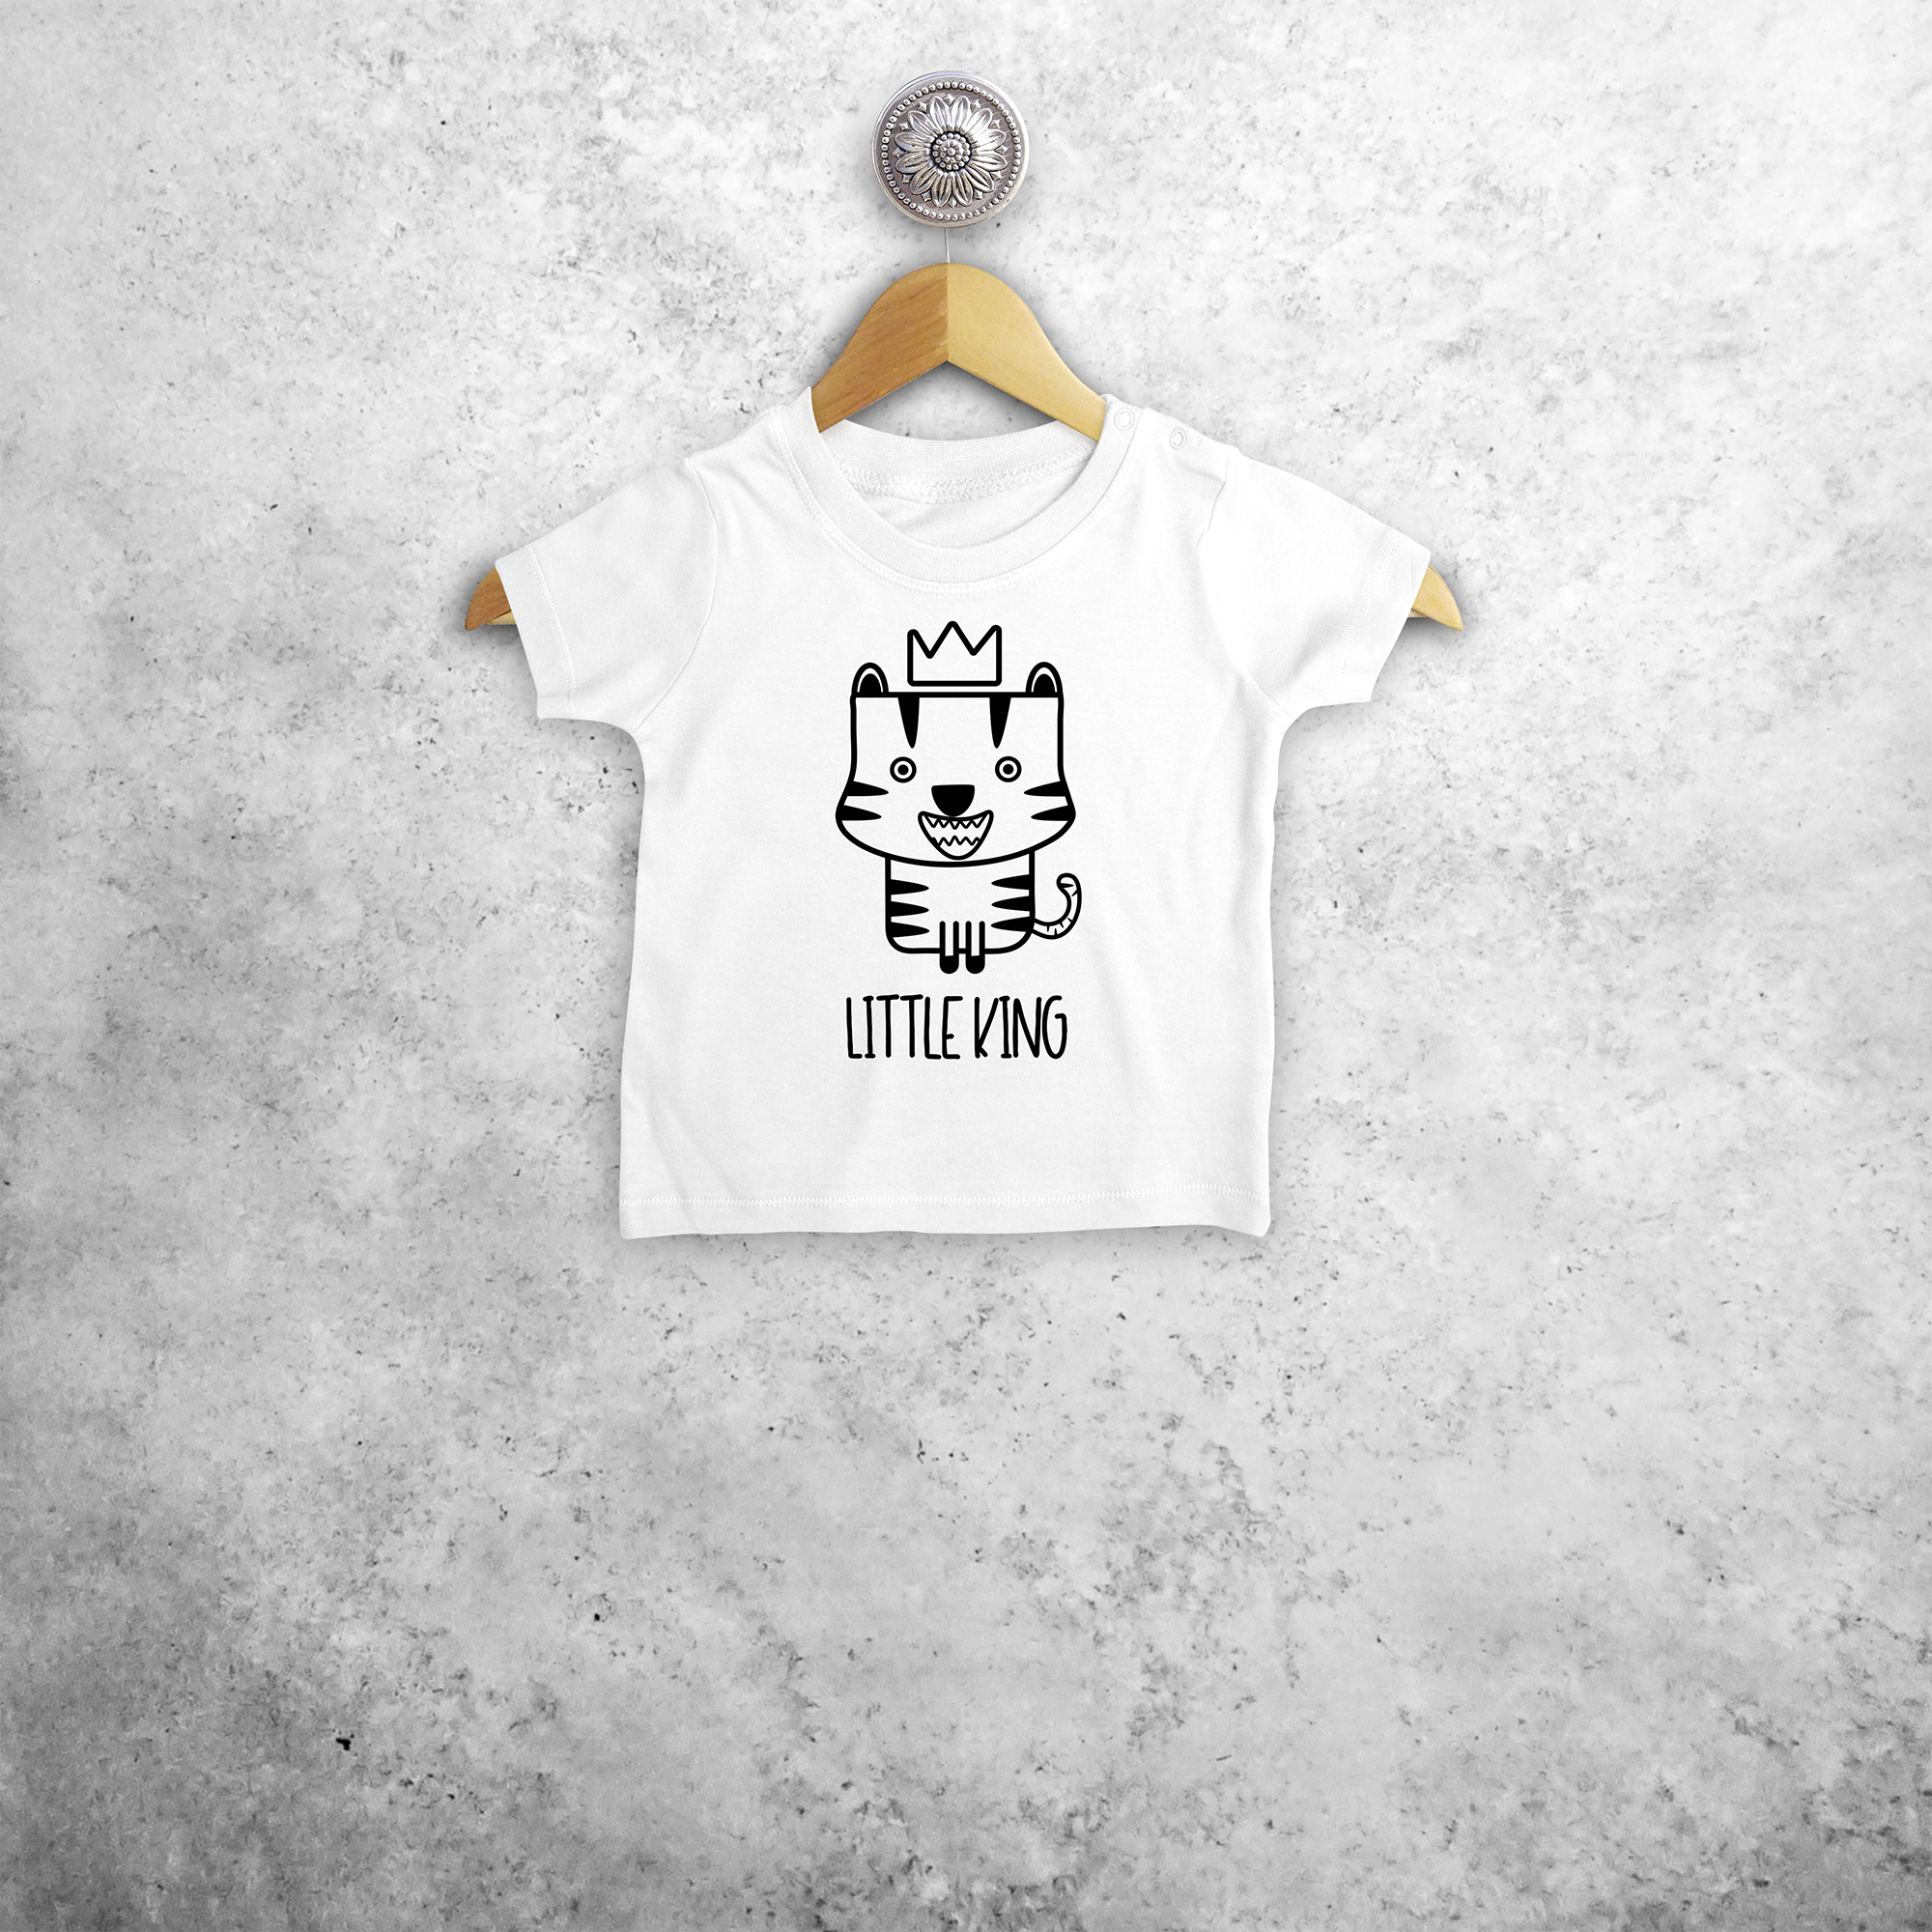 'Little king' baby shortsleeve shirt